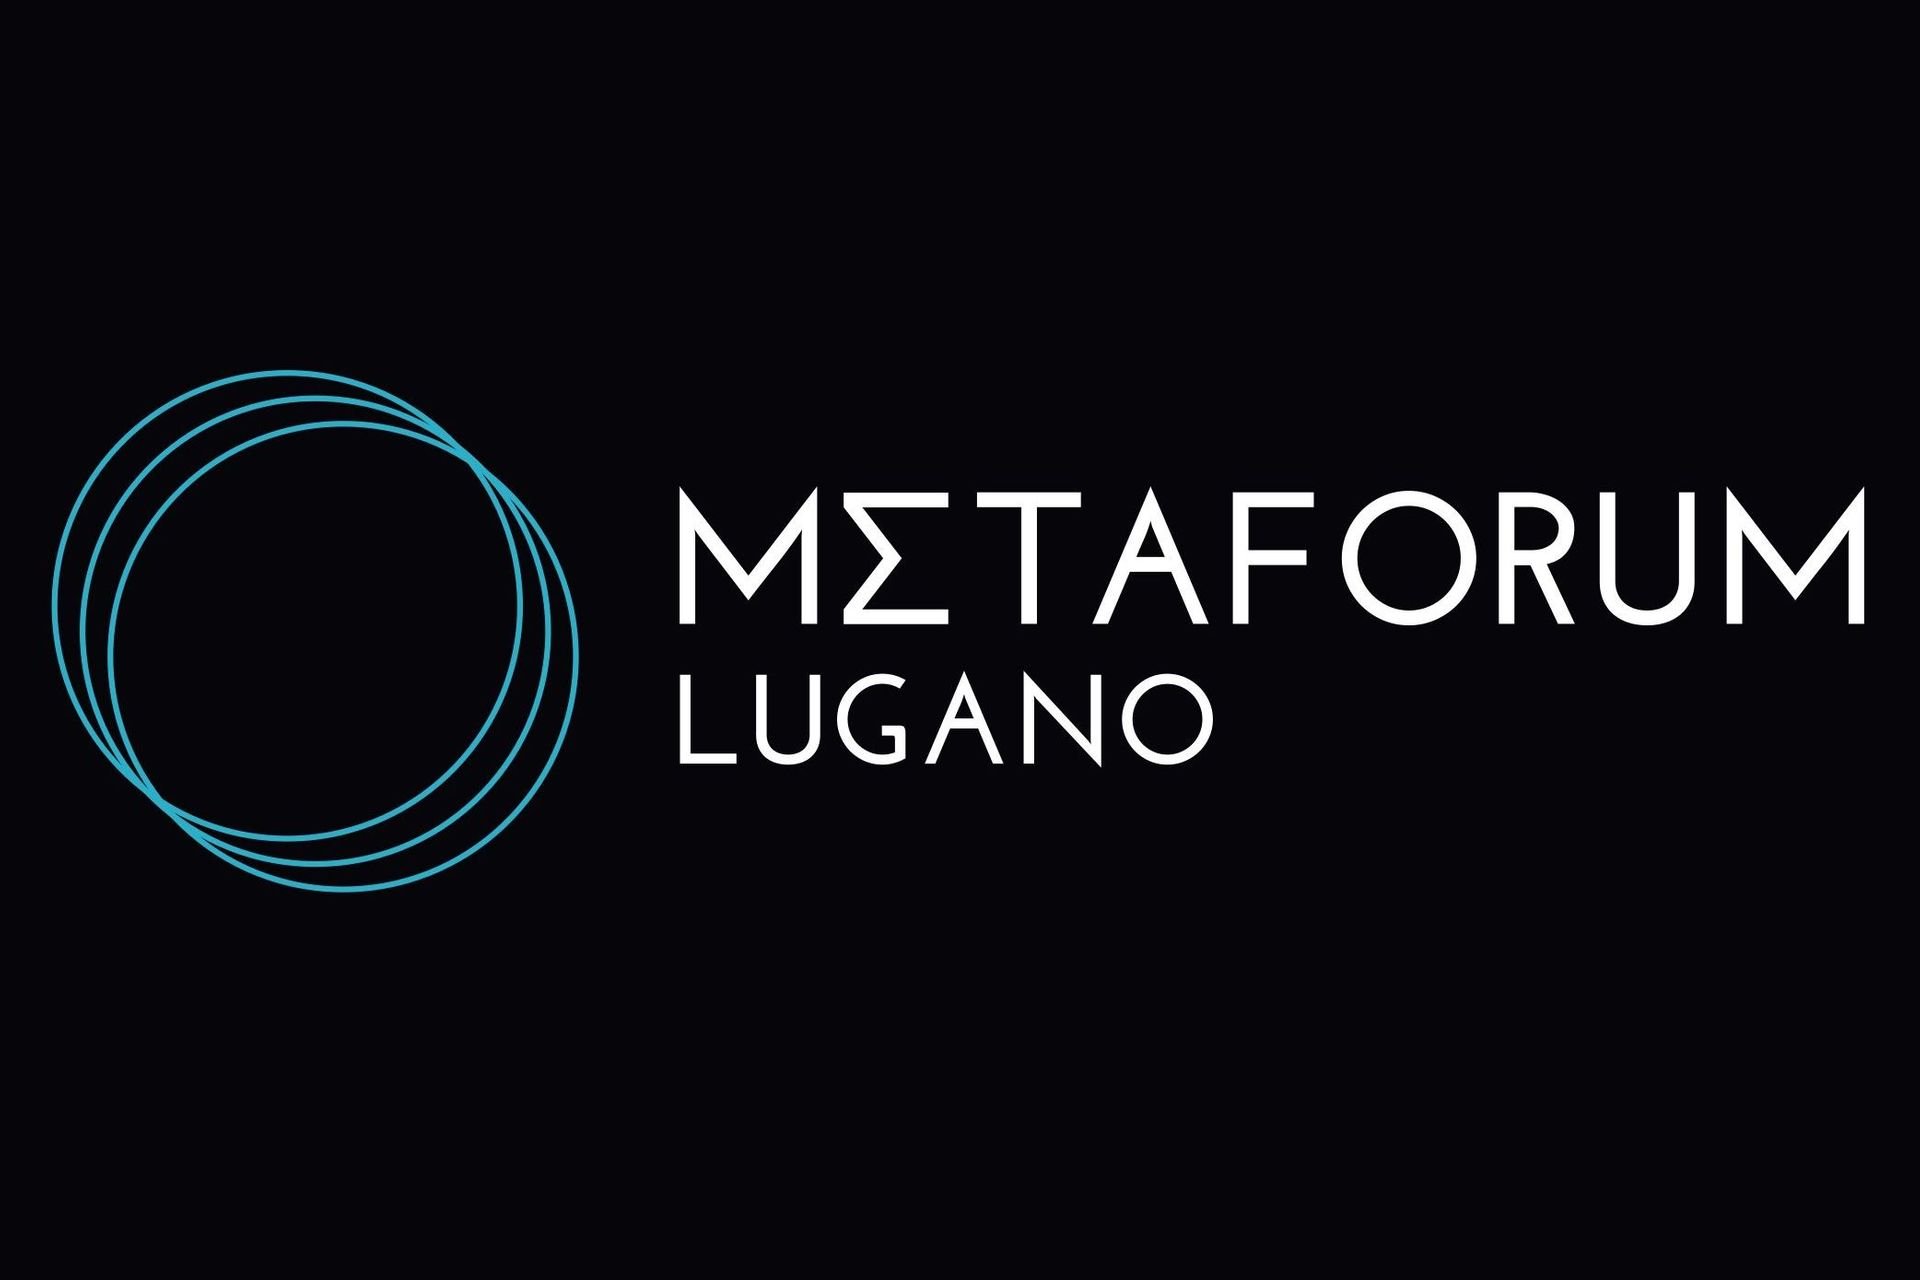 Das Logo des Metaforum Lugano